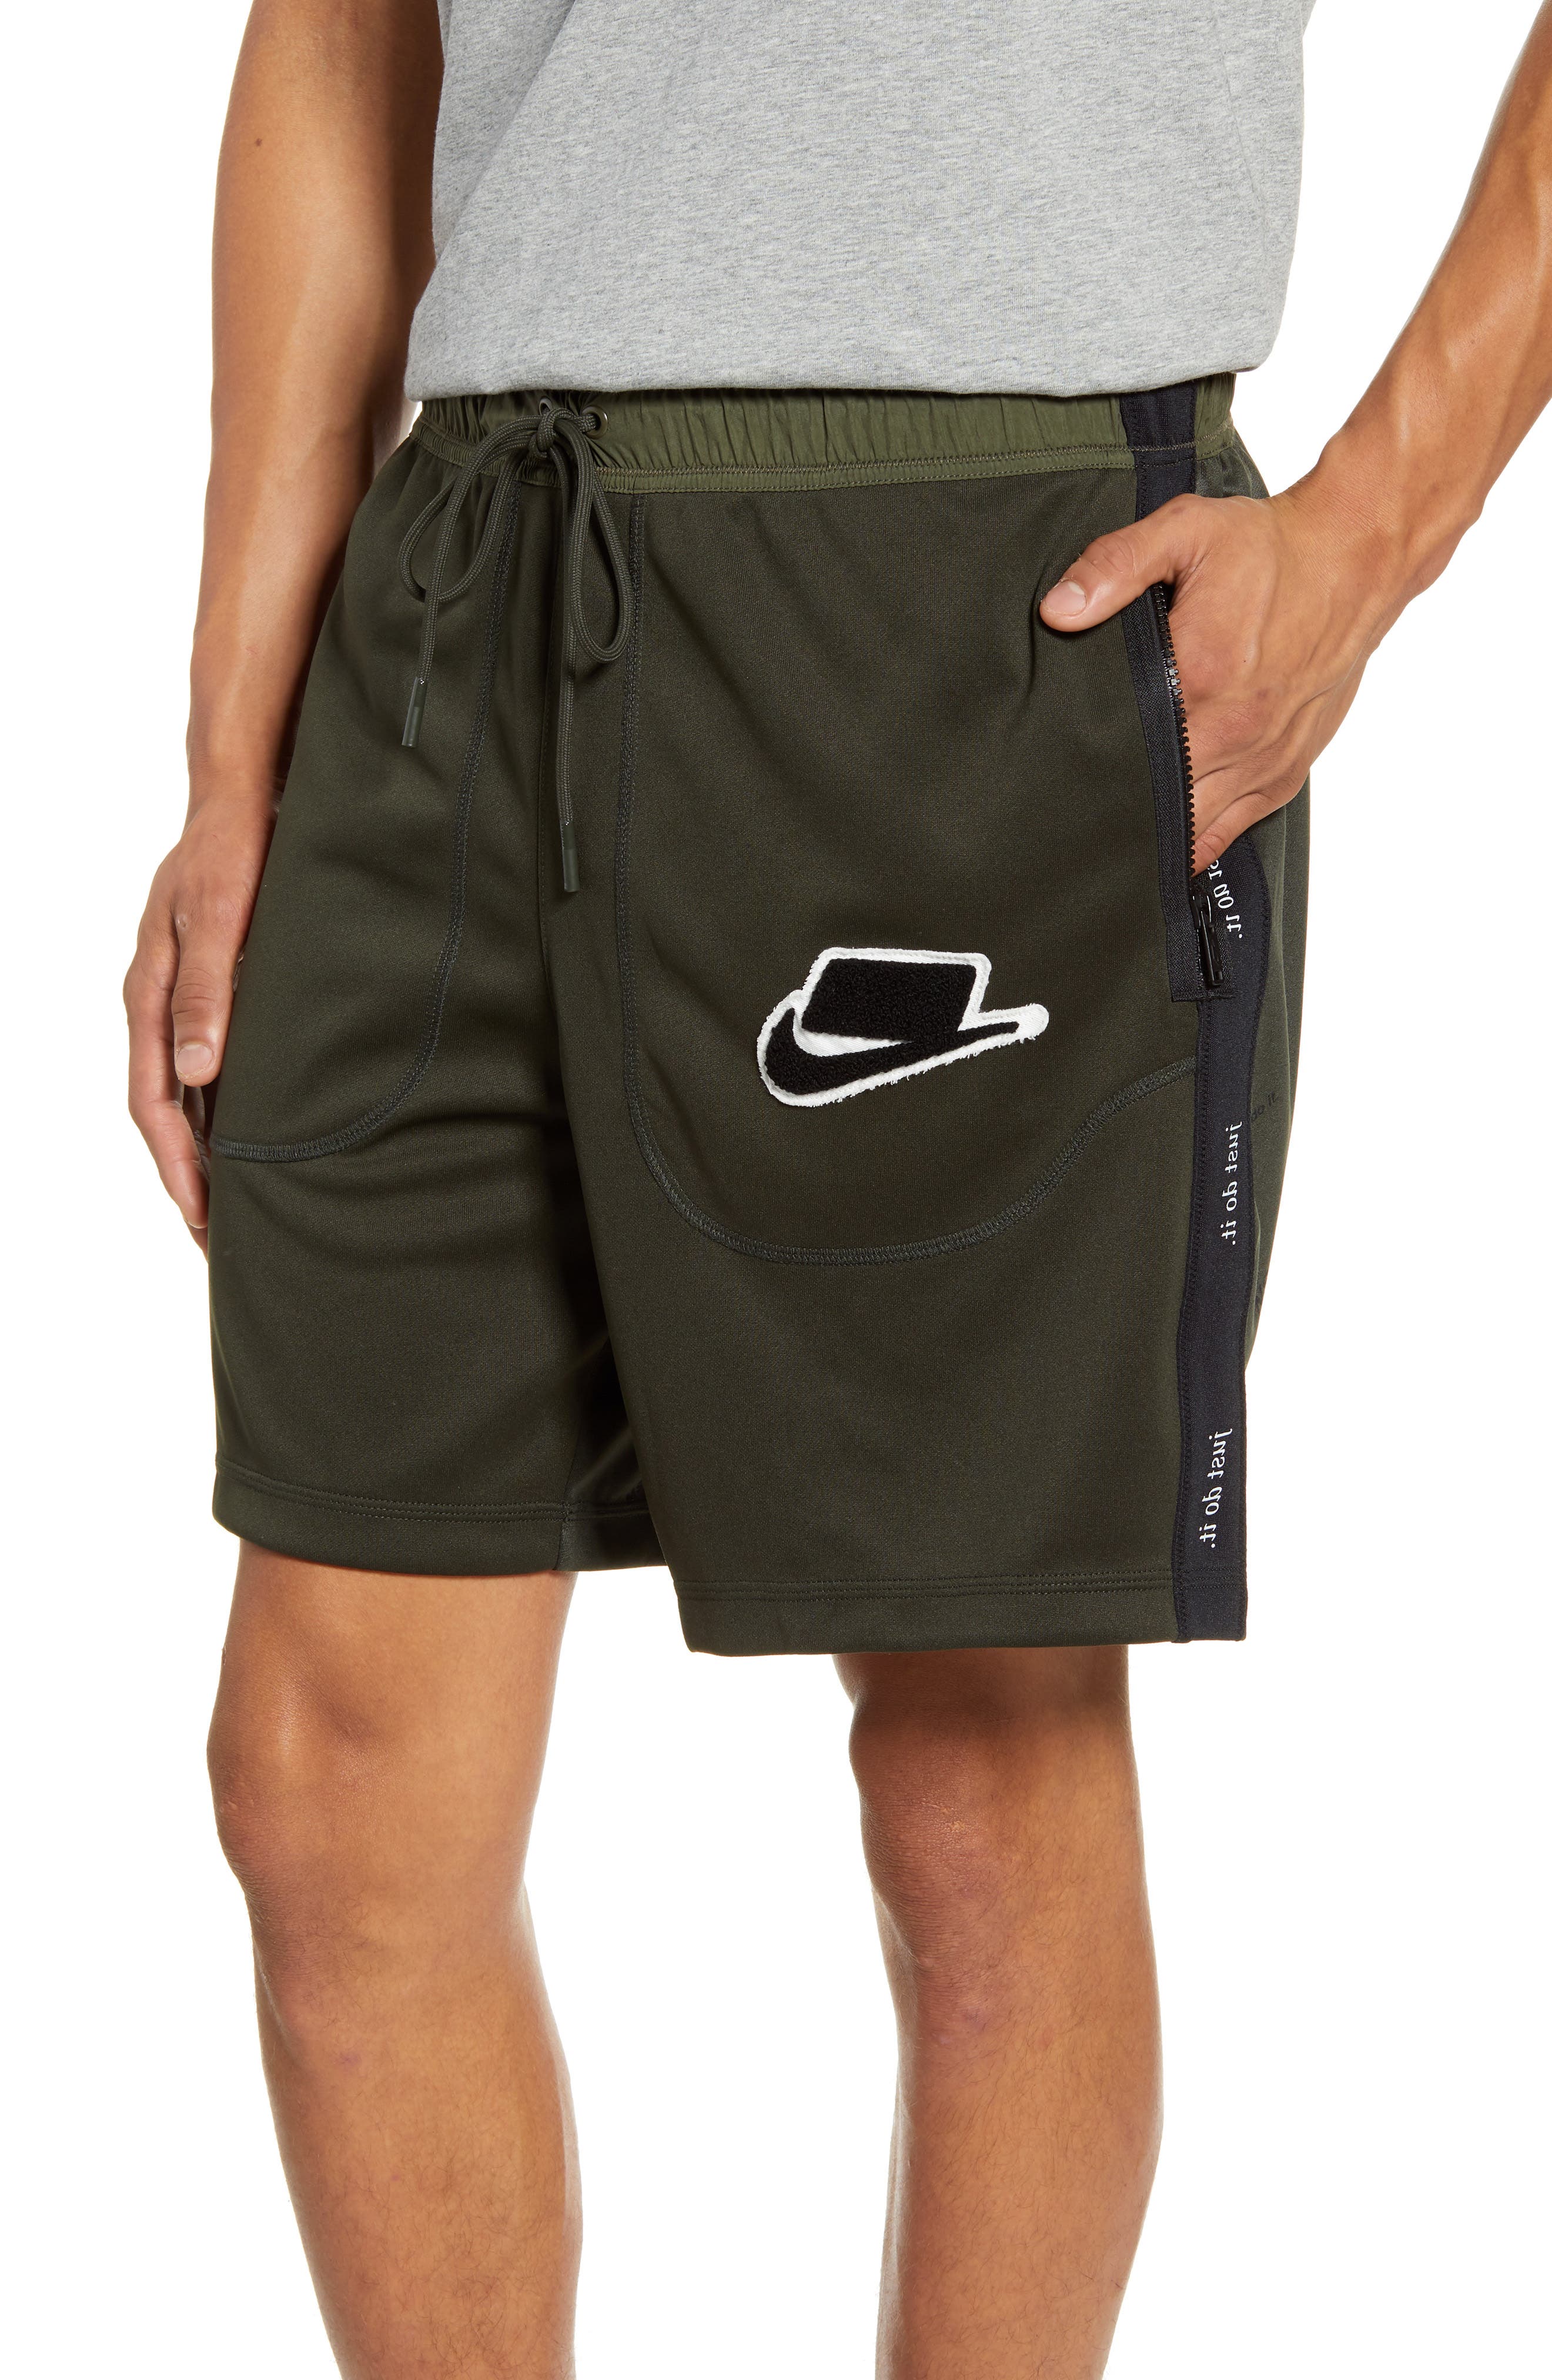 zip pocket shorts nike